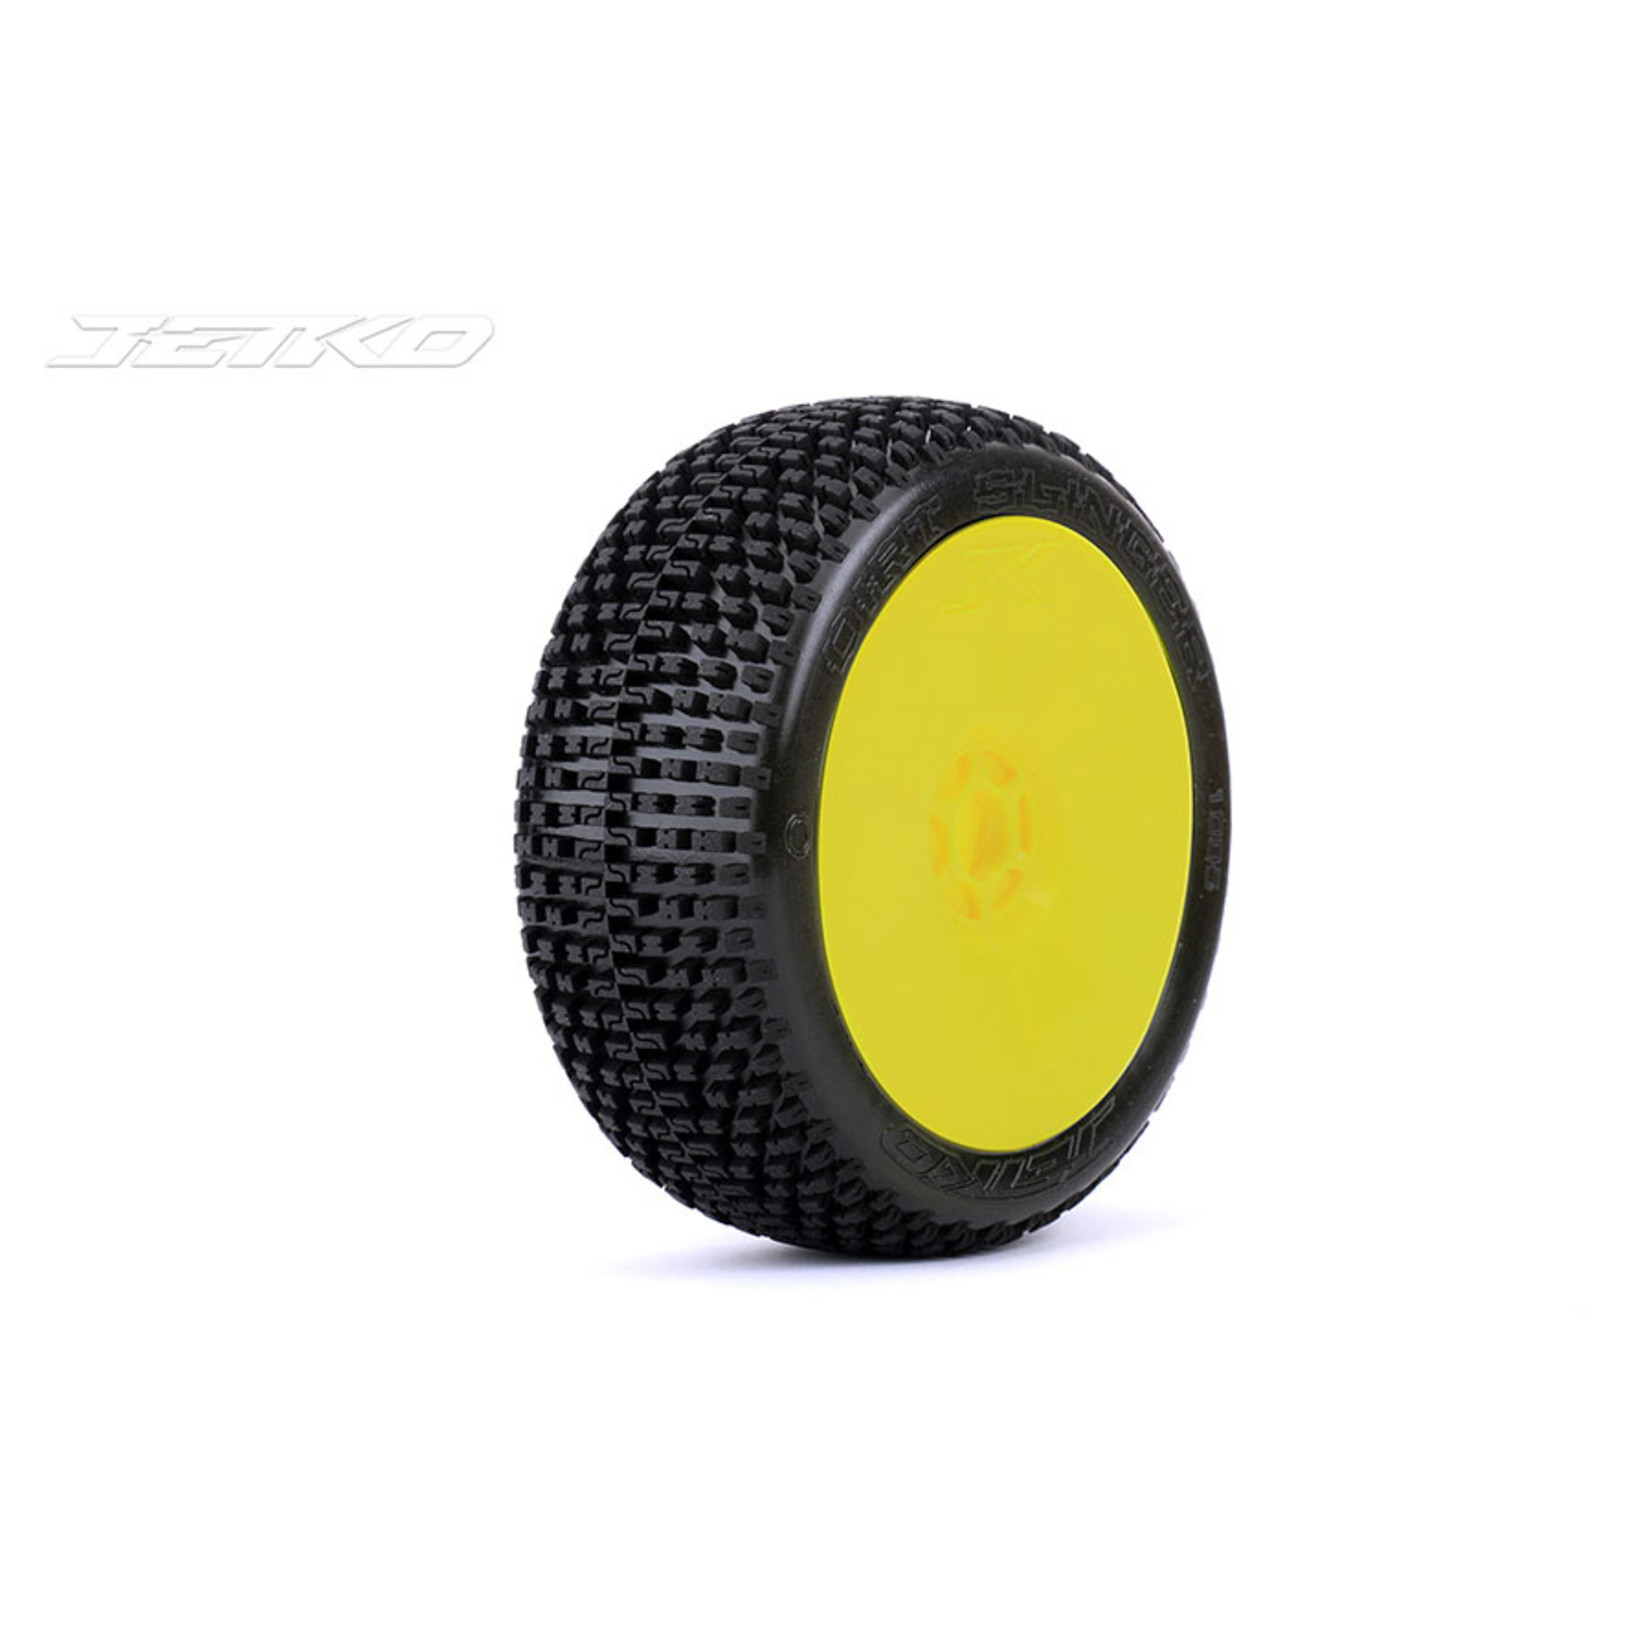 Jetko Tires Jetko Dirt Slinger 1/8 Buggy Pre-Mounted Tires on Yellow Dish Rims (Medium Soft) (2) #1005DYMSG